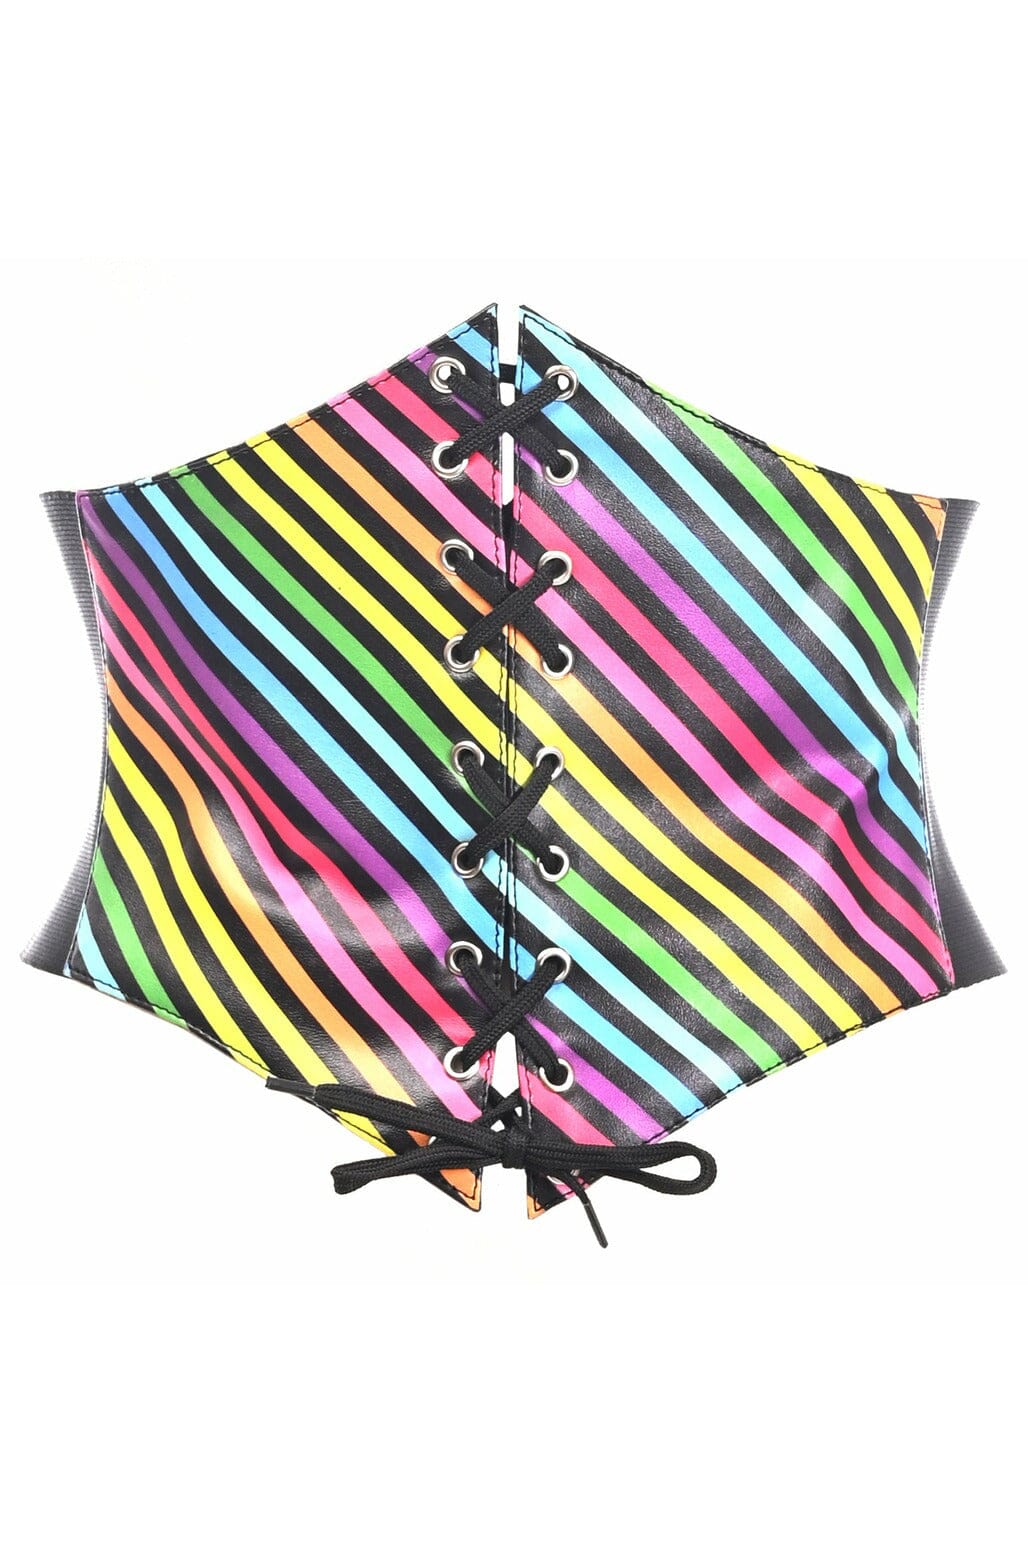 Lavish Rainbow Stripes Lace-Up Corset Belt Cincher-Corset Belts-Daisy Corsets-Rainbow-S-SEXYSHOES.COM